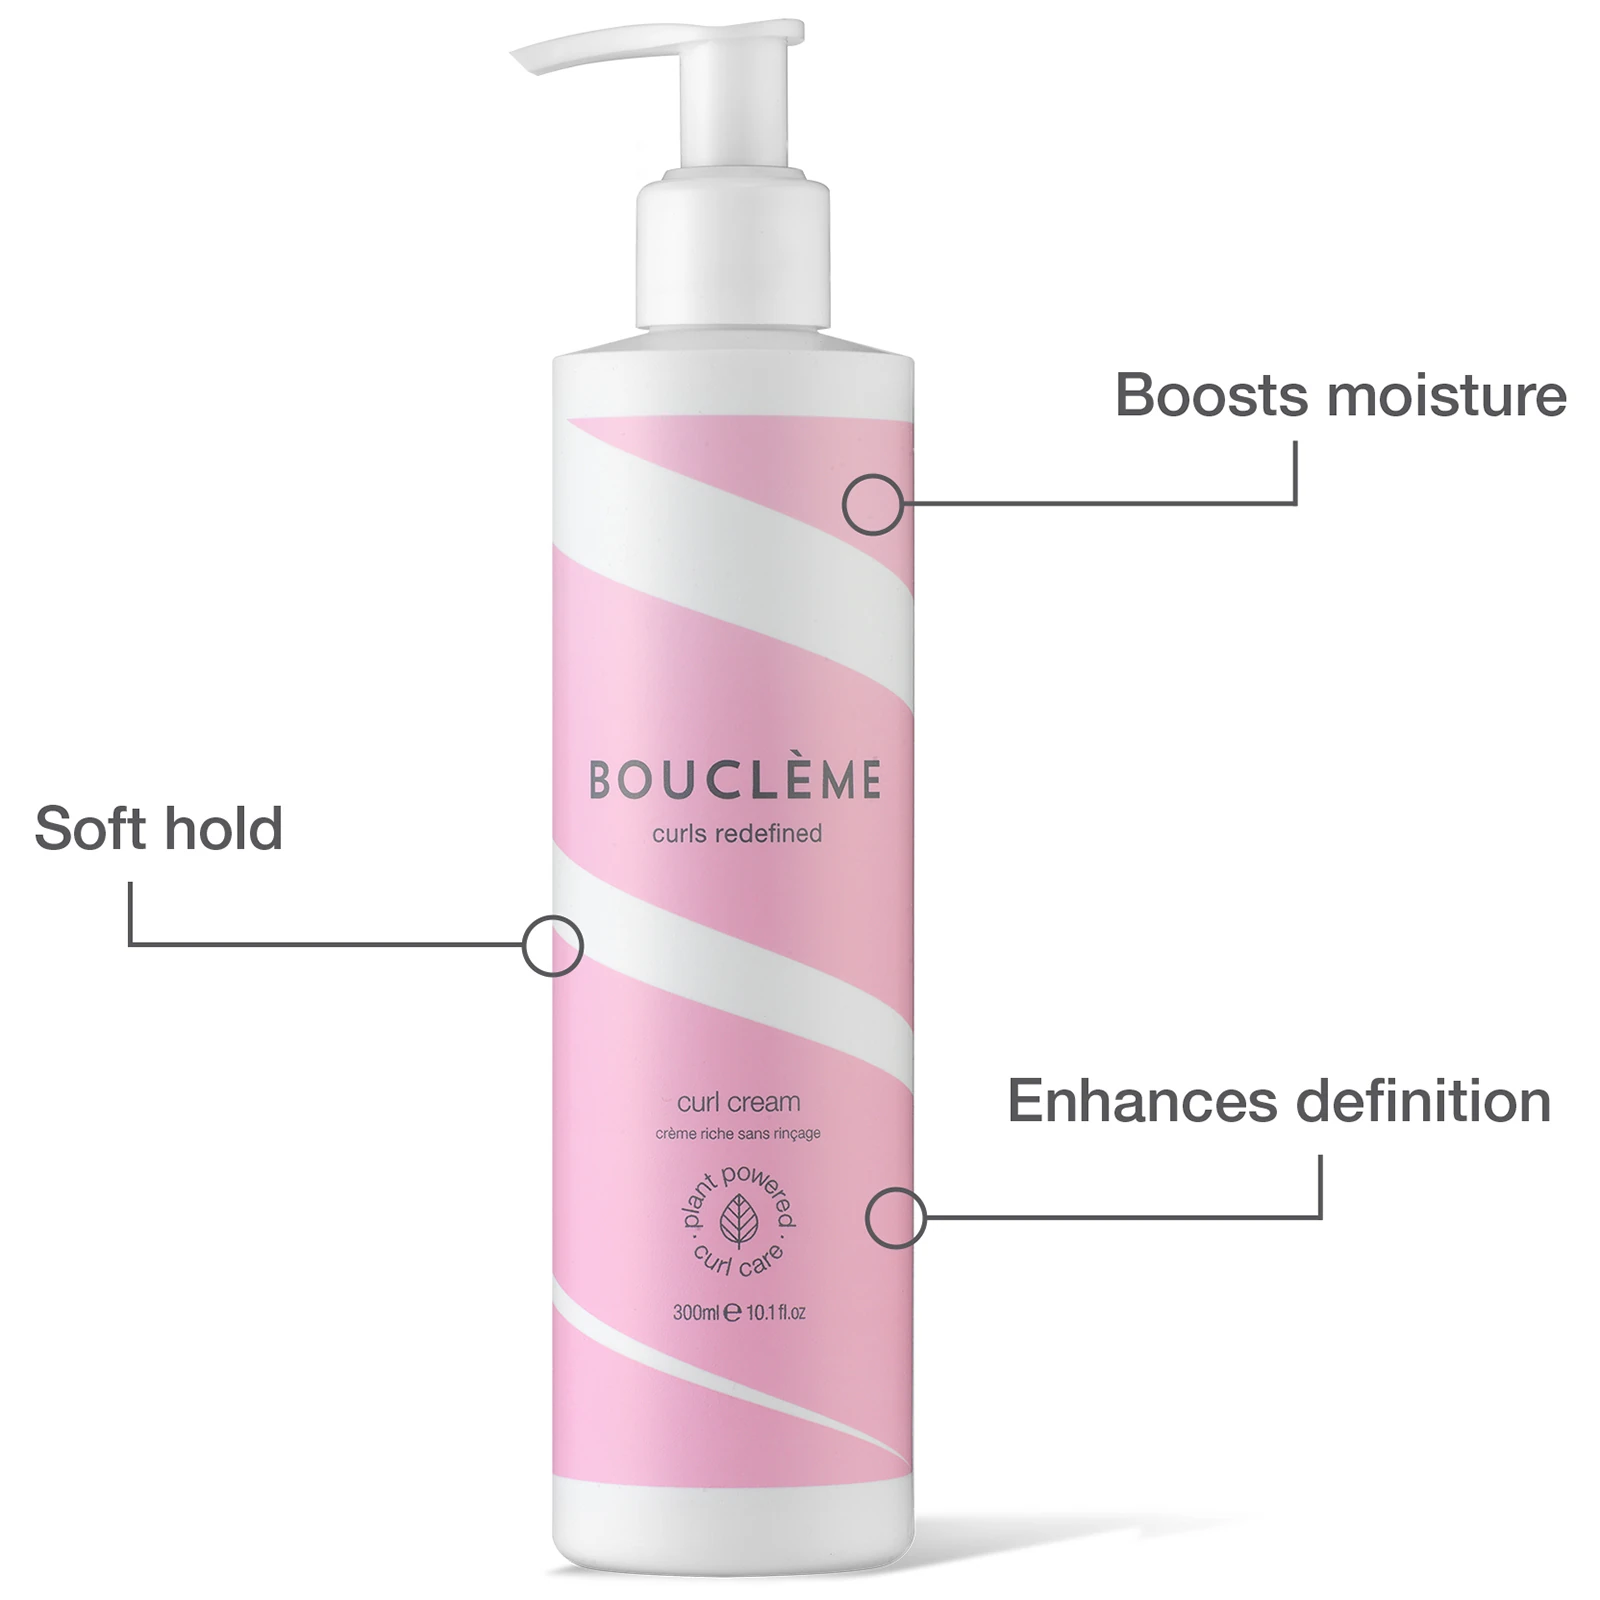 boosts moisture, soft hold, enhances definition